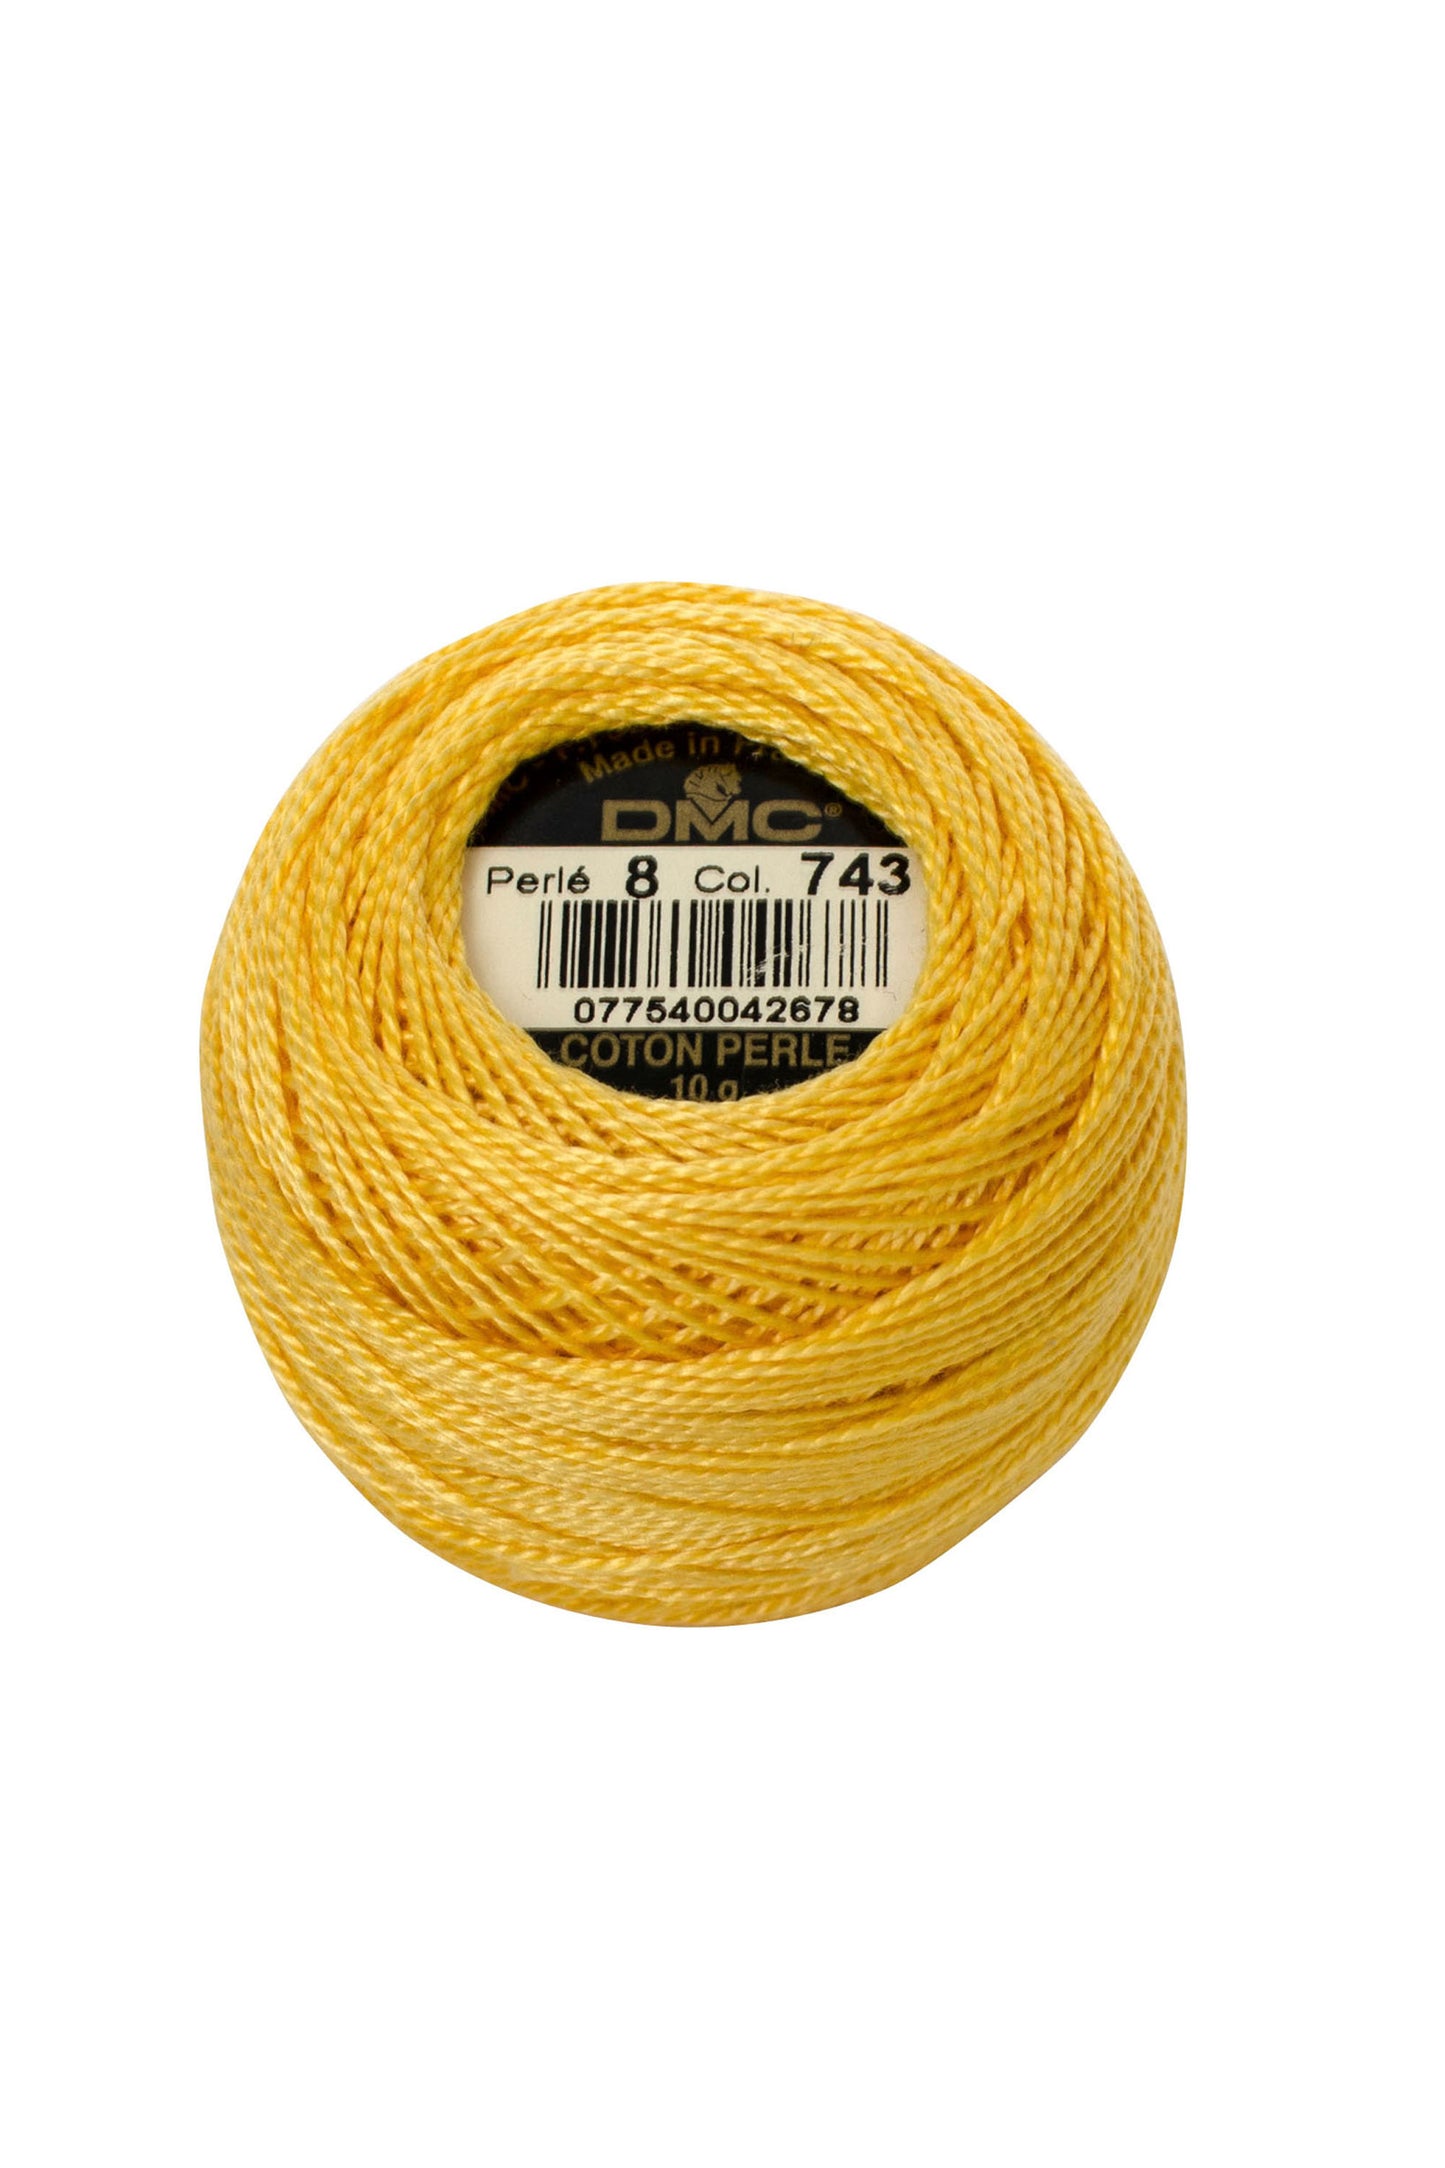 743 Medium Yellow - DMC #8 Perle Cotton Ball